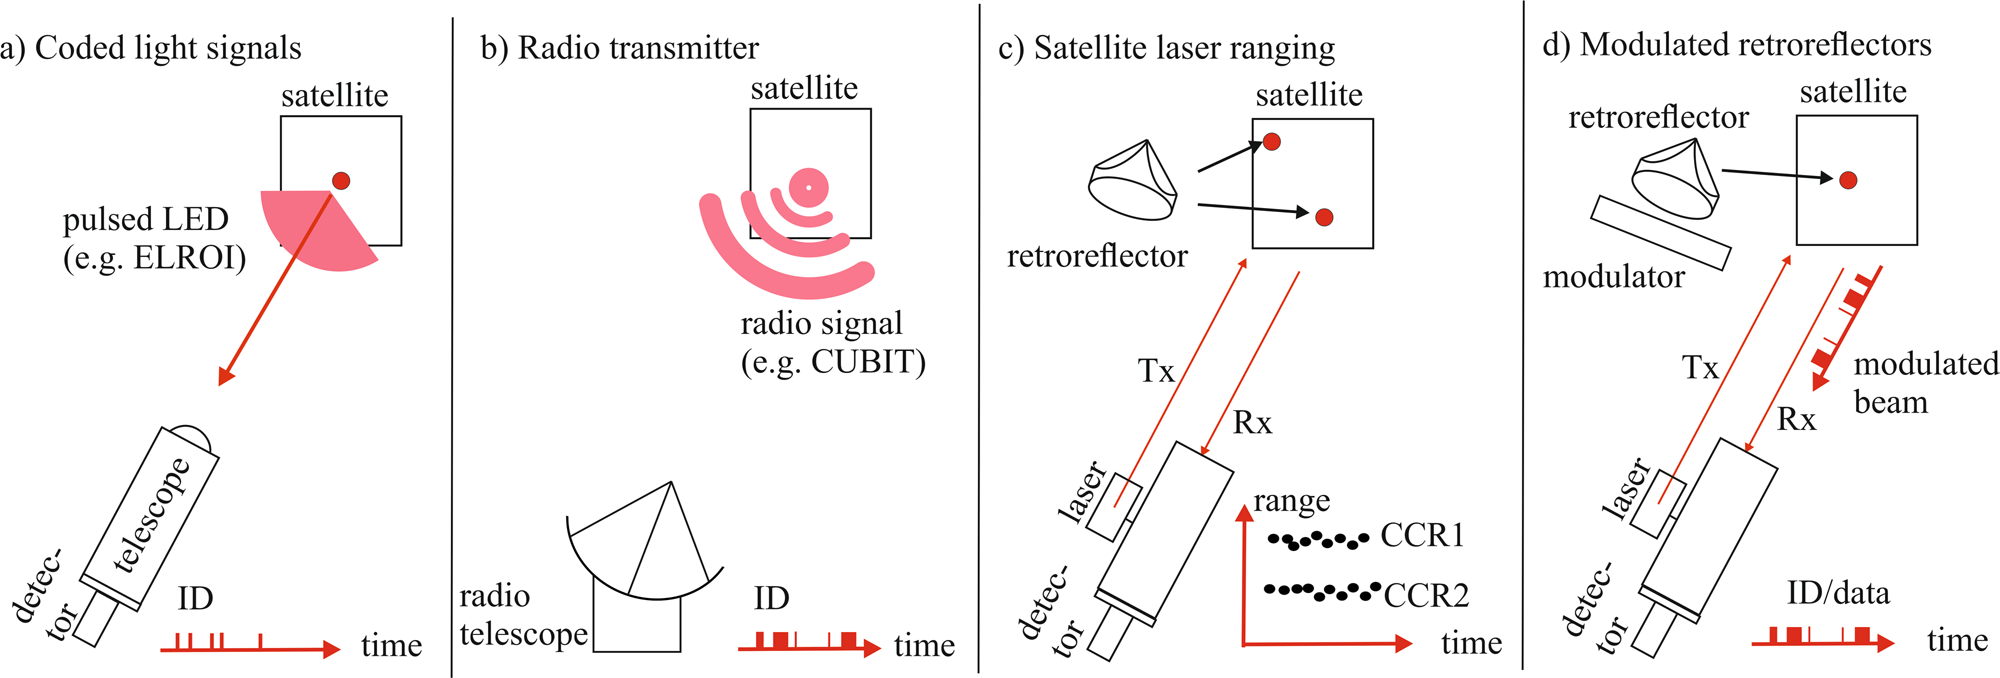 Space object identification via polarimetric satellite laser ranging |  Communications Engineering